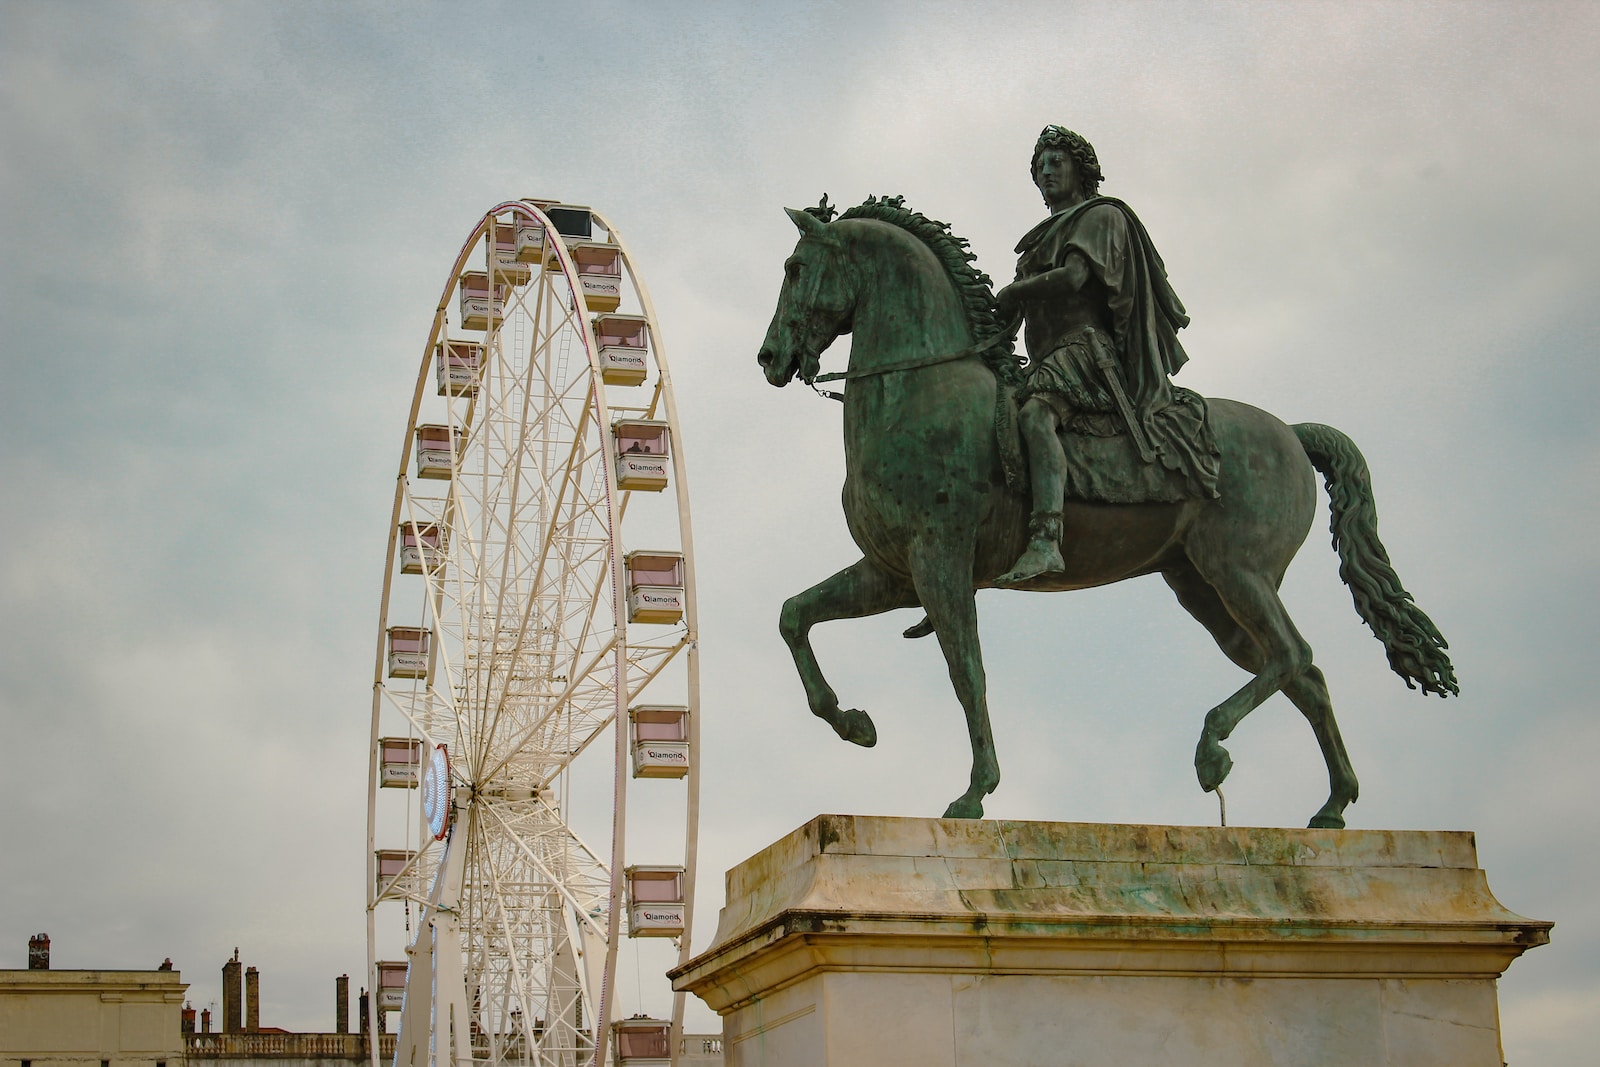 a statue of a man riding a horse next to a ferris wheel